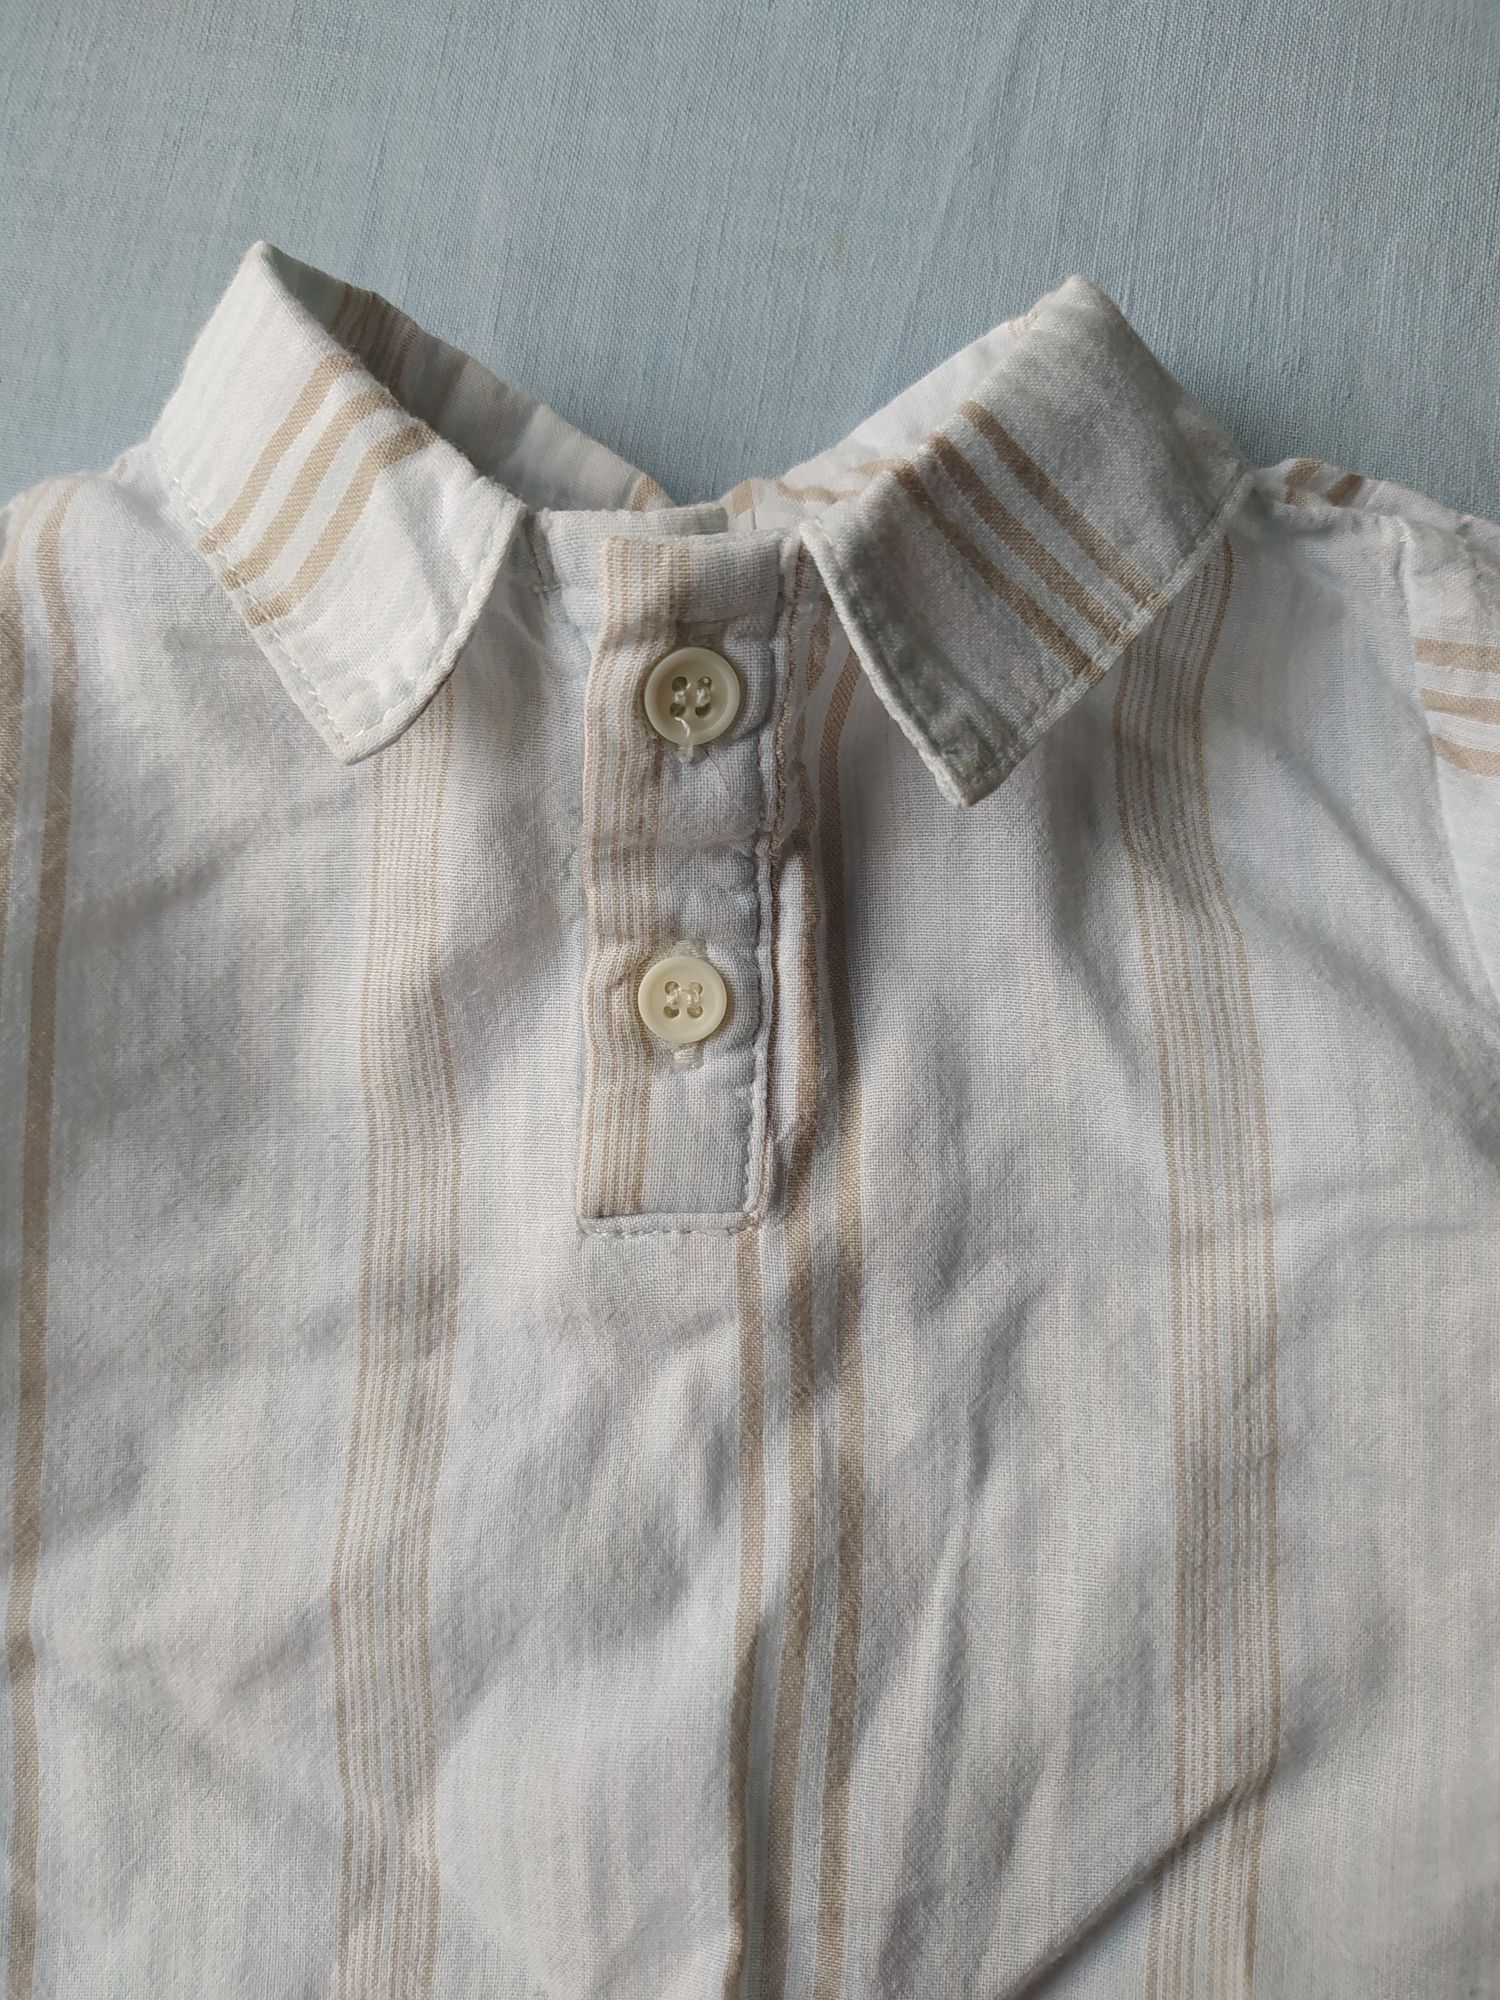 Camisa manga curta menino 50 cm 0 meses